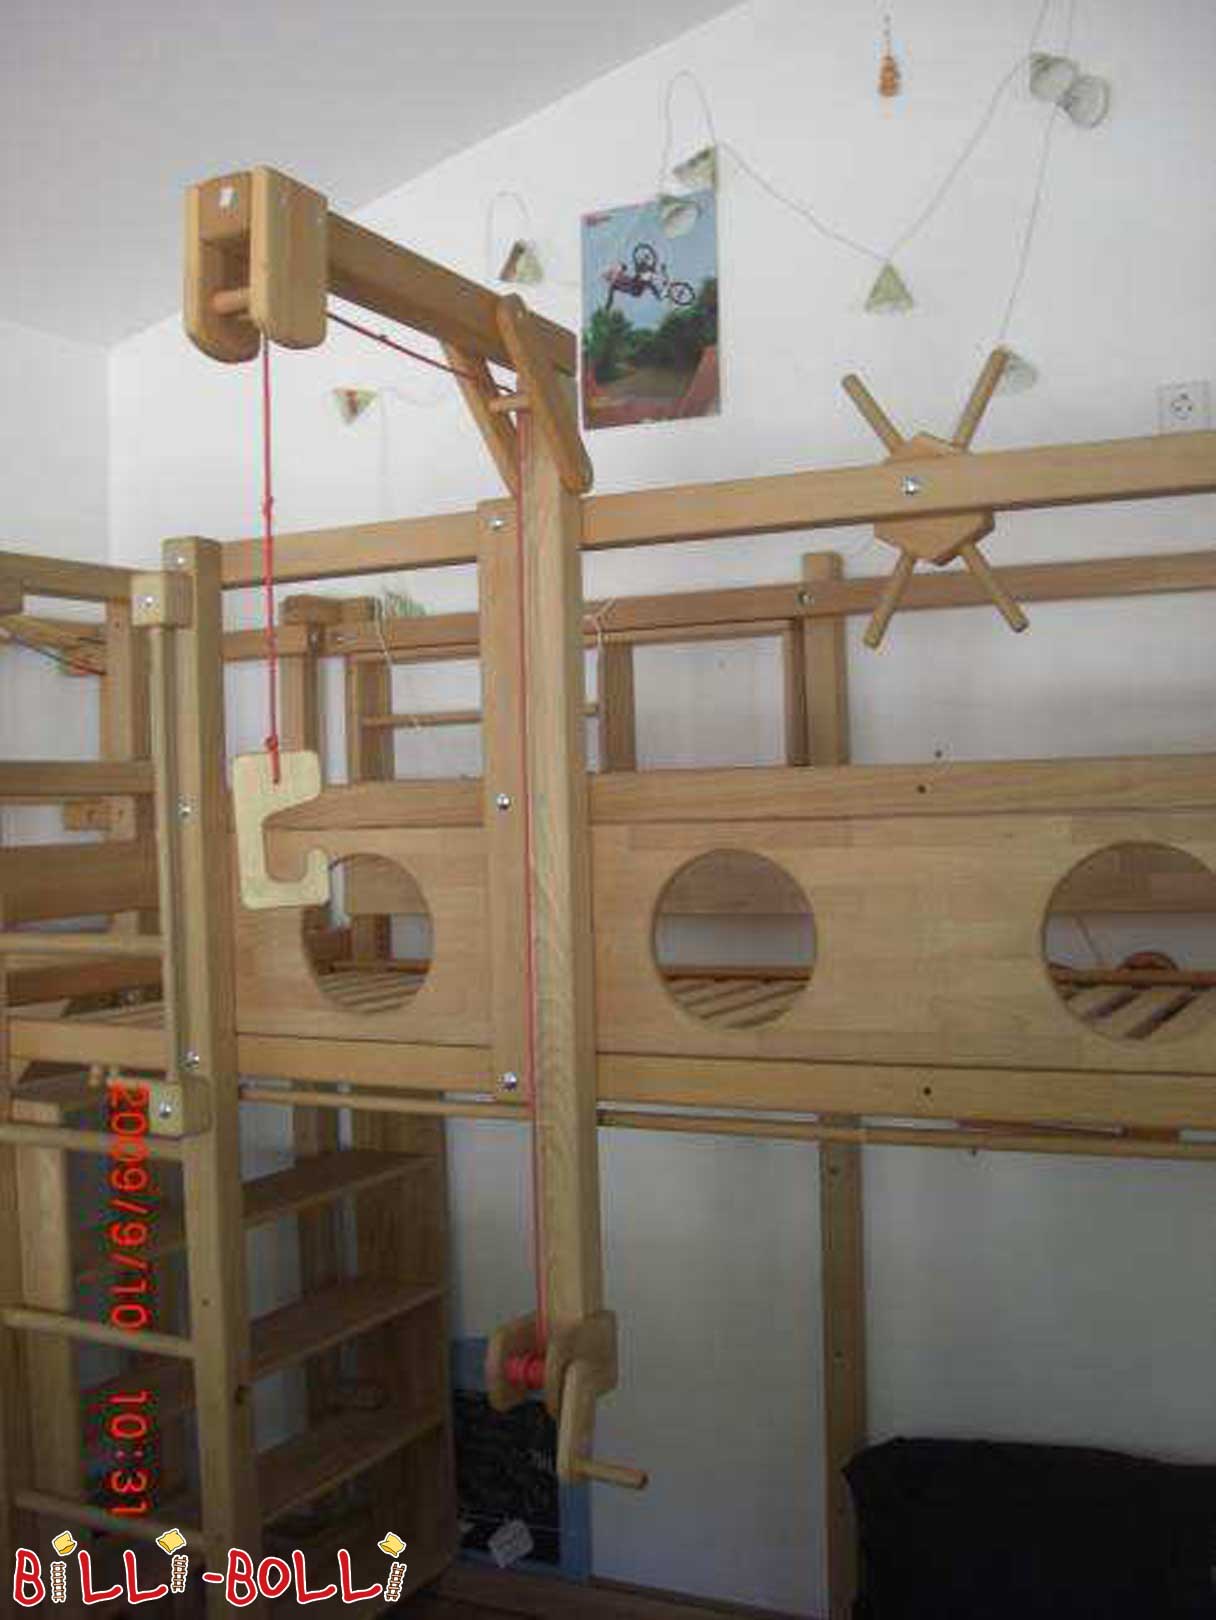 Original Billi Bolli loft cama 100 * 200 haya sin tratar (Categoría: cama alta segunda mano)